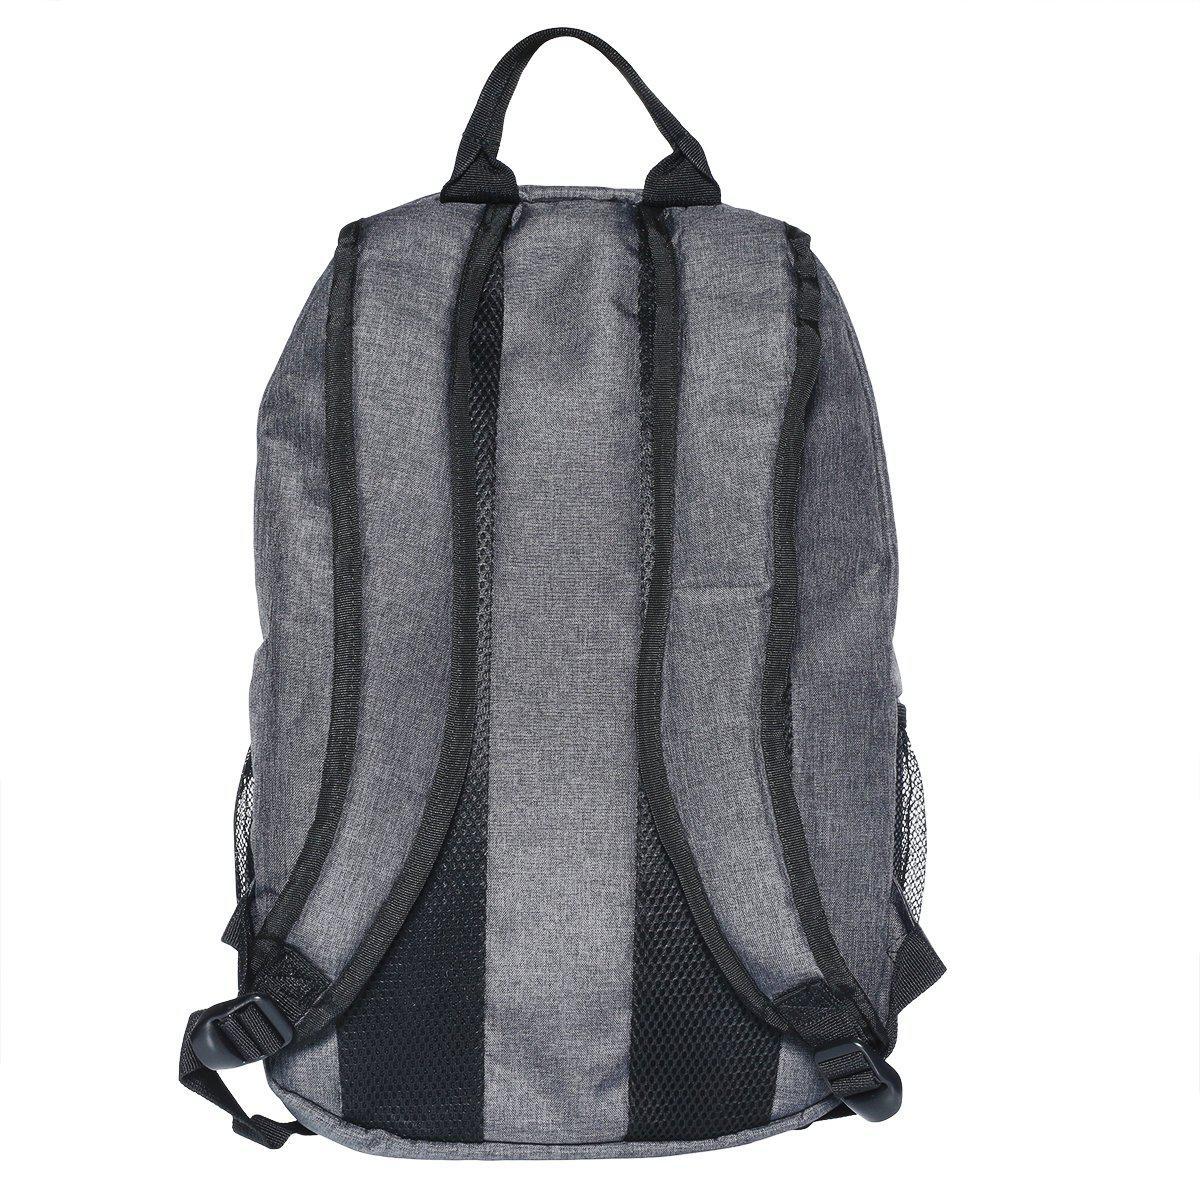 Odor Control Backpack